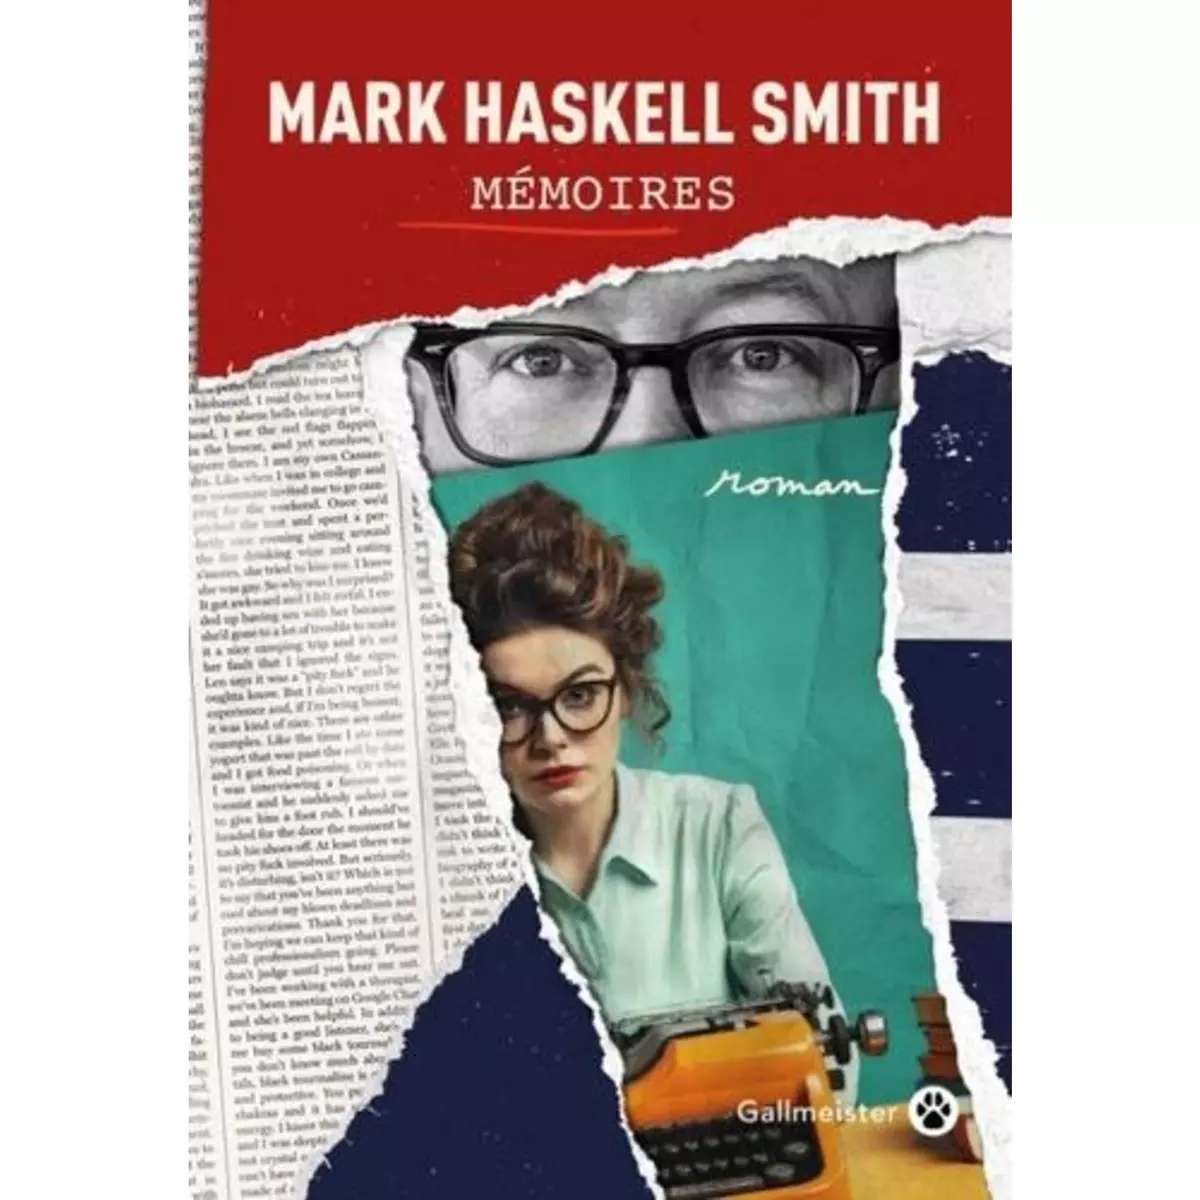  MEMOIRES, Haskell Smith Mark